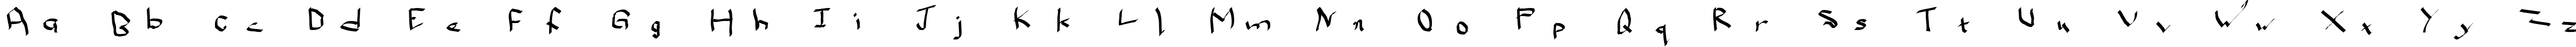 Пример написания английского алфавита шрифтом Qwikscribble Normal